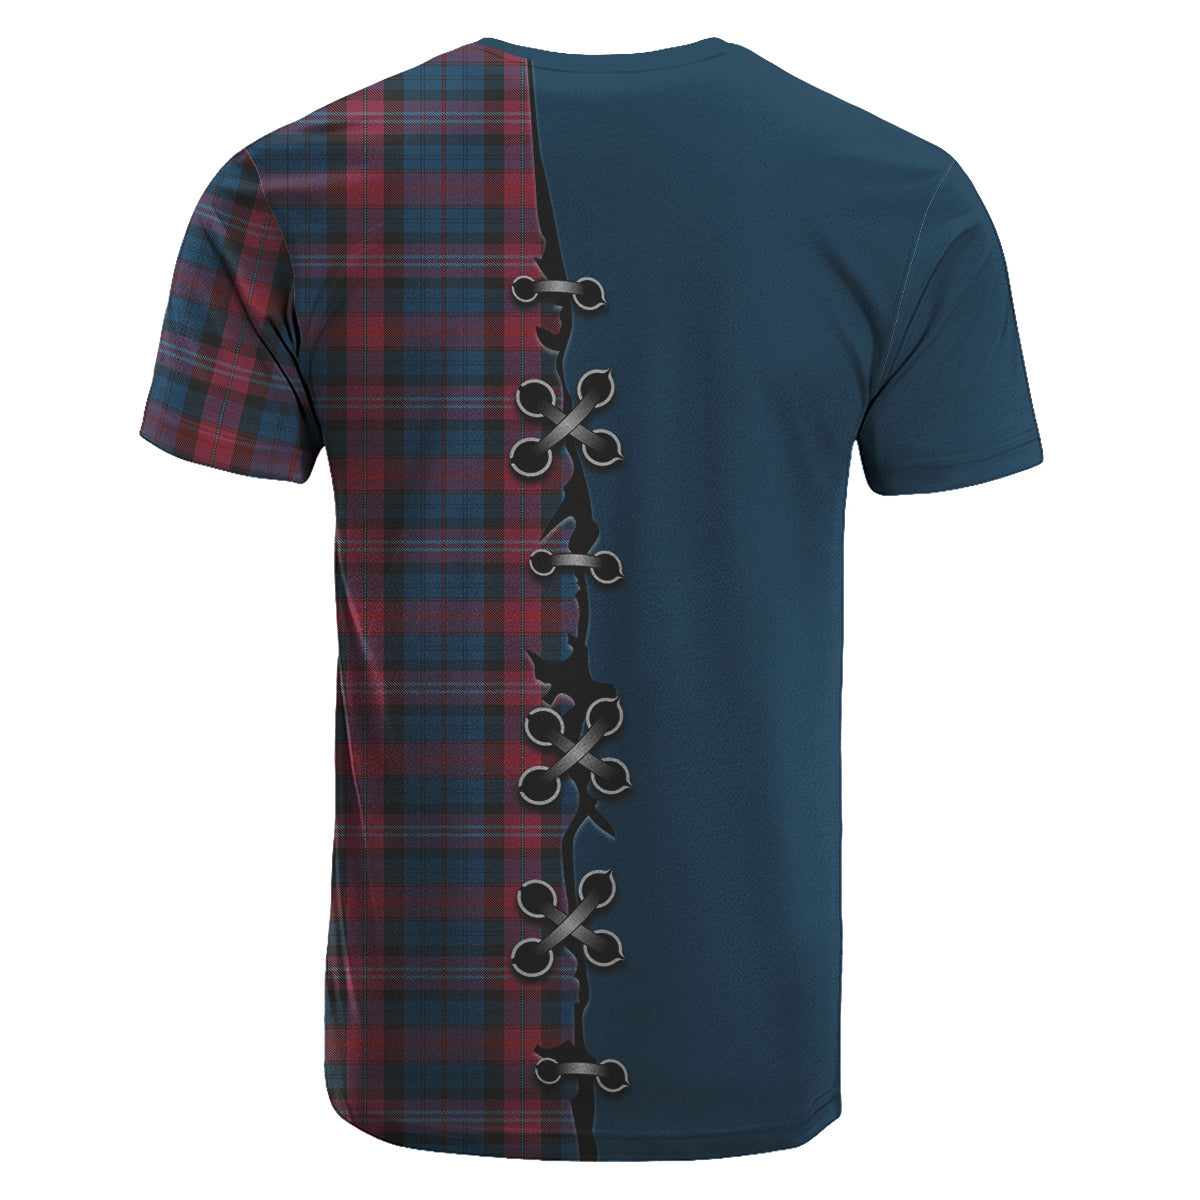 Evans Tartan T-shirt - Lion Rampant And Celtic Thistle Style